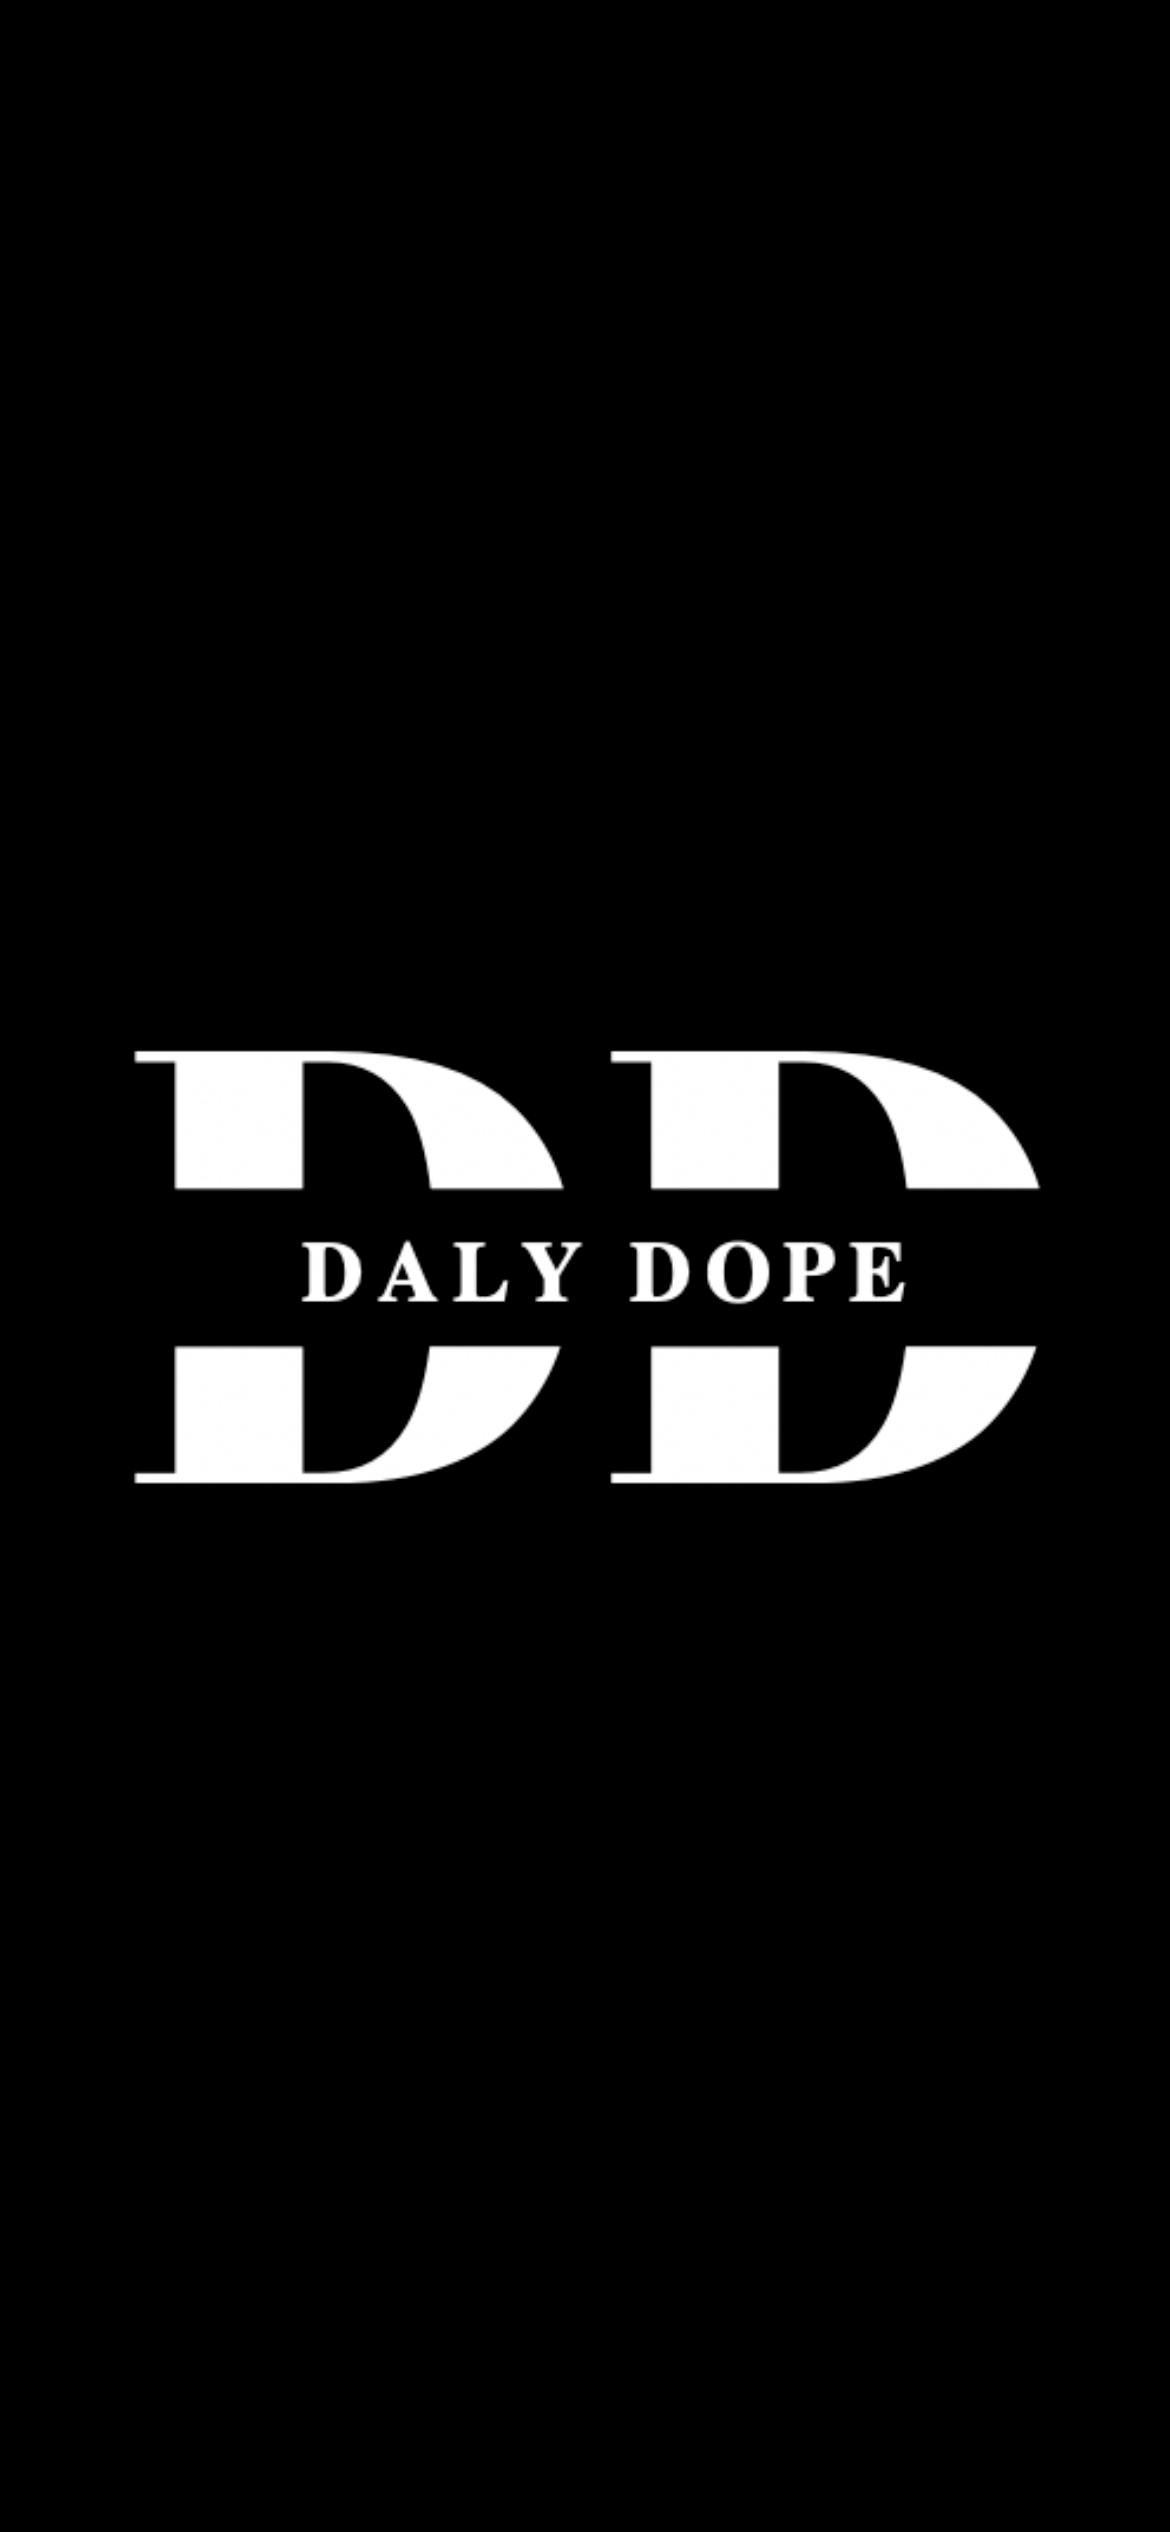 Daly Dope logo